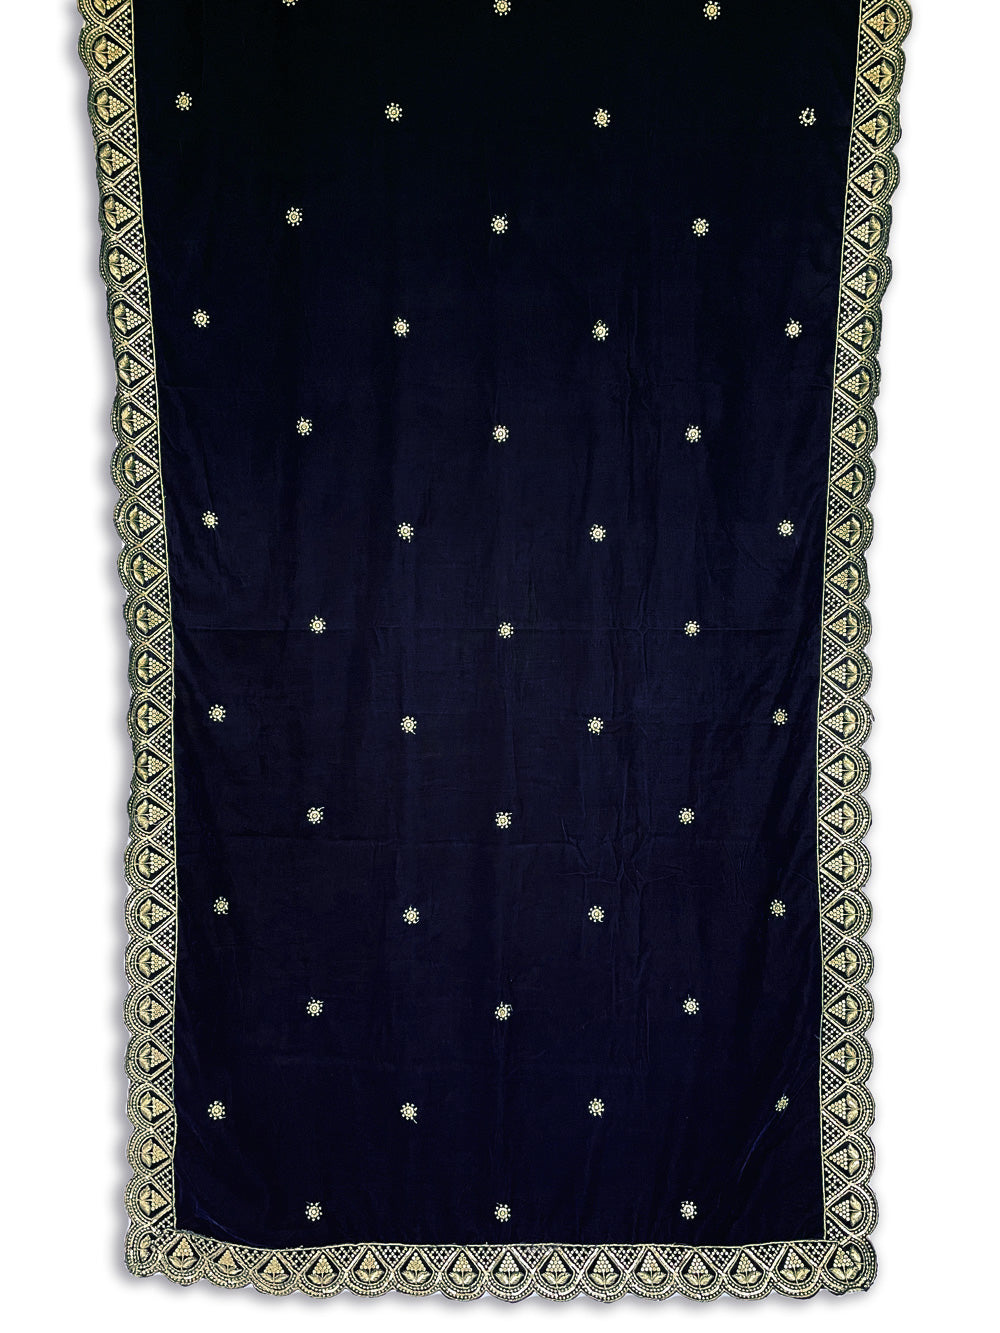 Women's Dark Navy Blue Embroidered Velvet Shawl